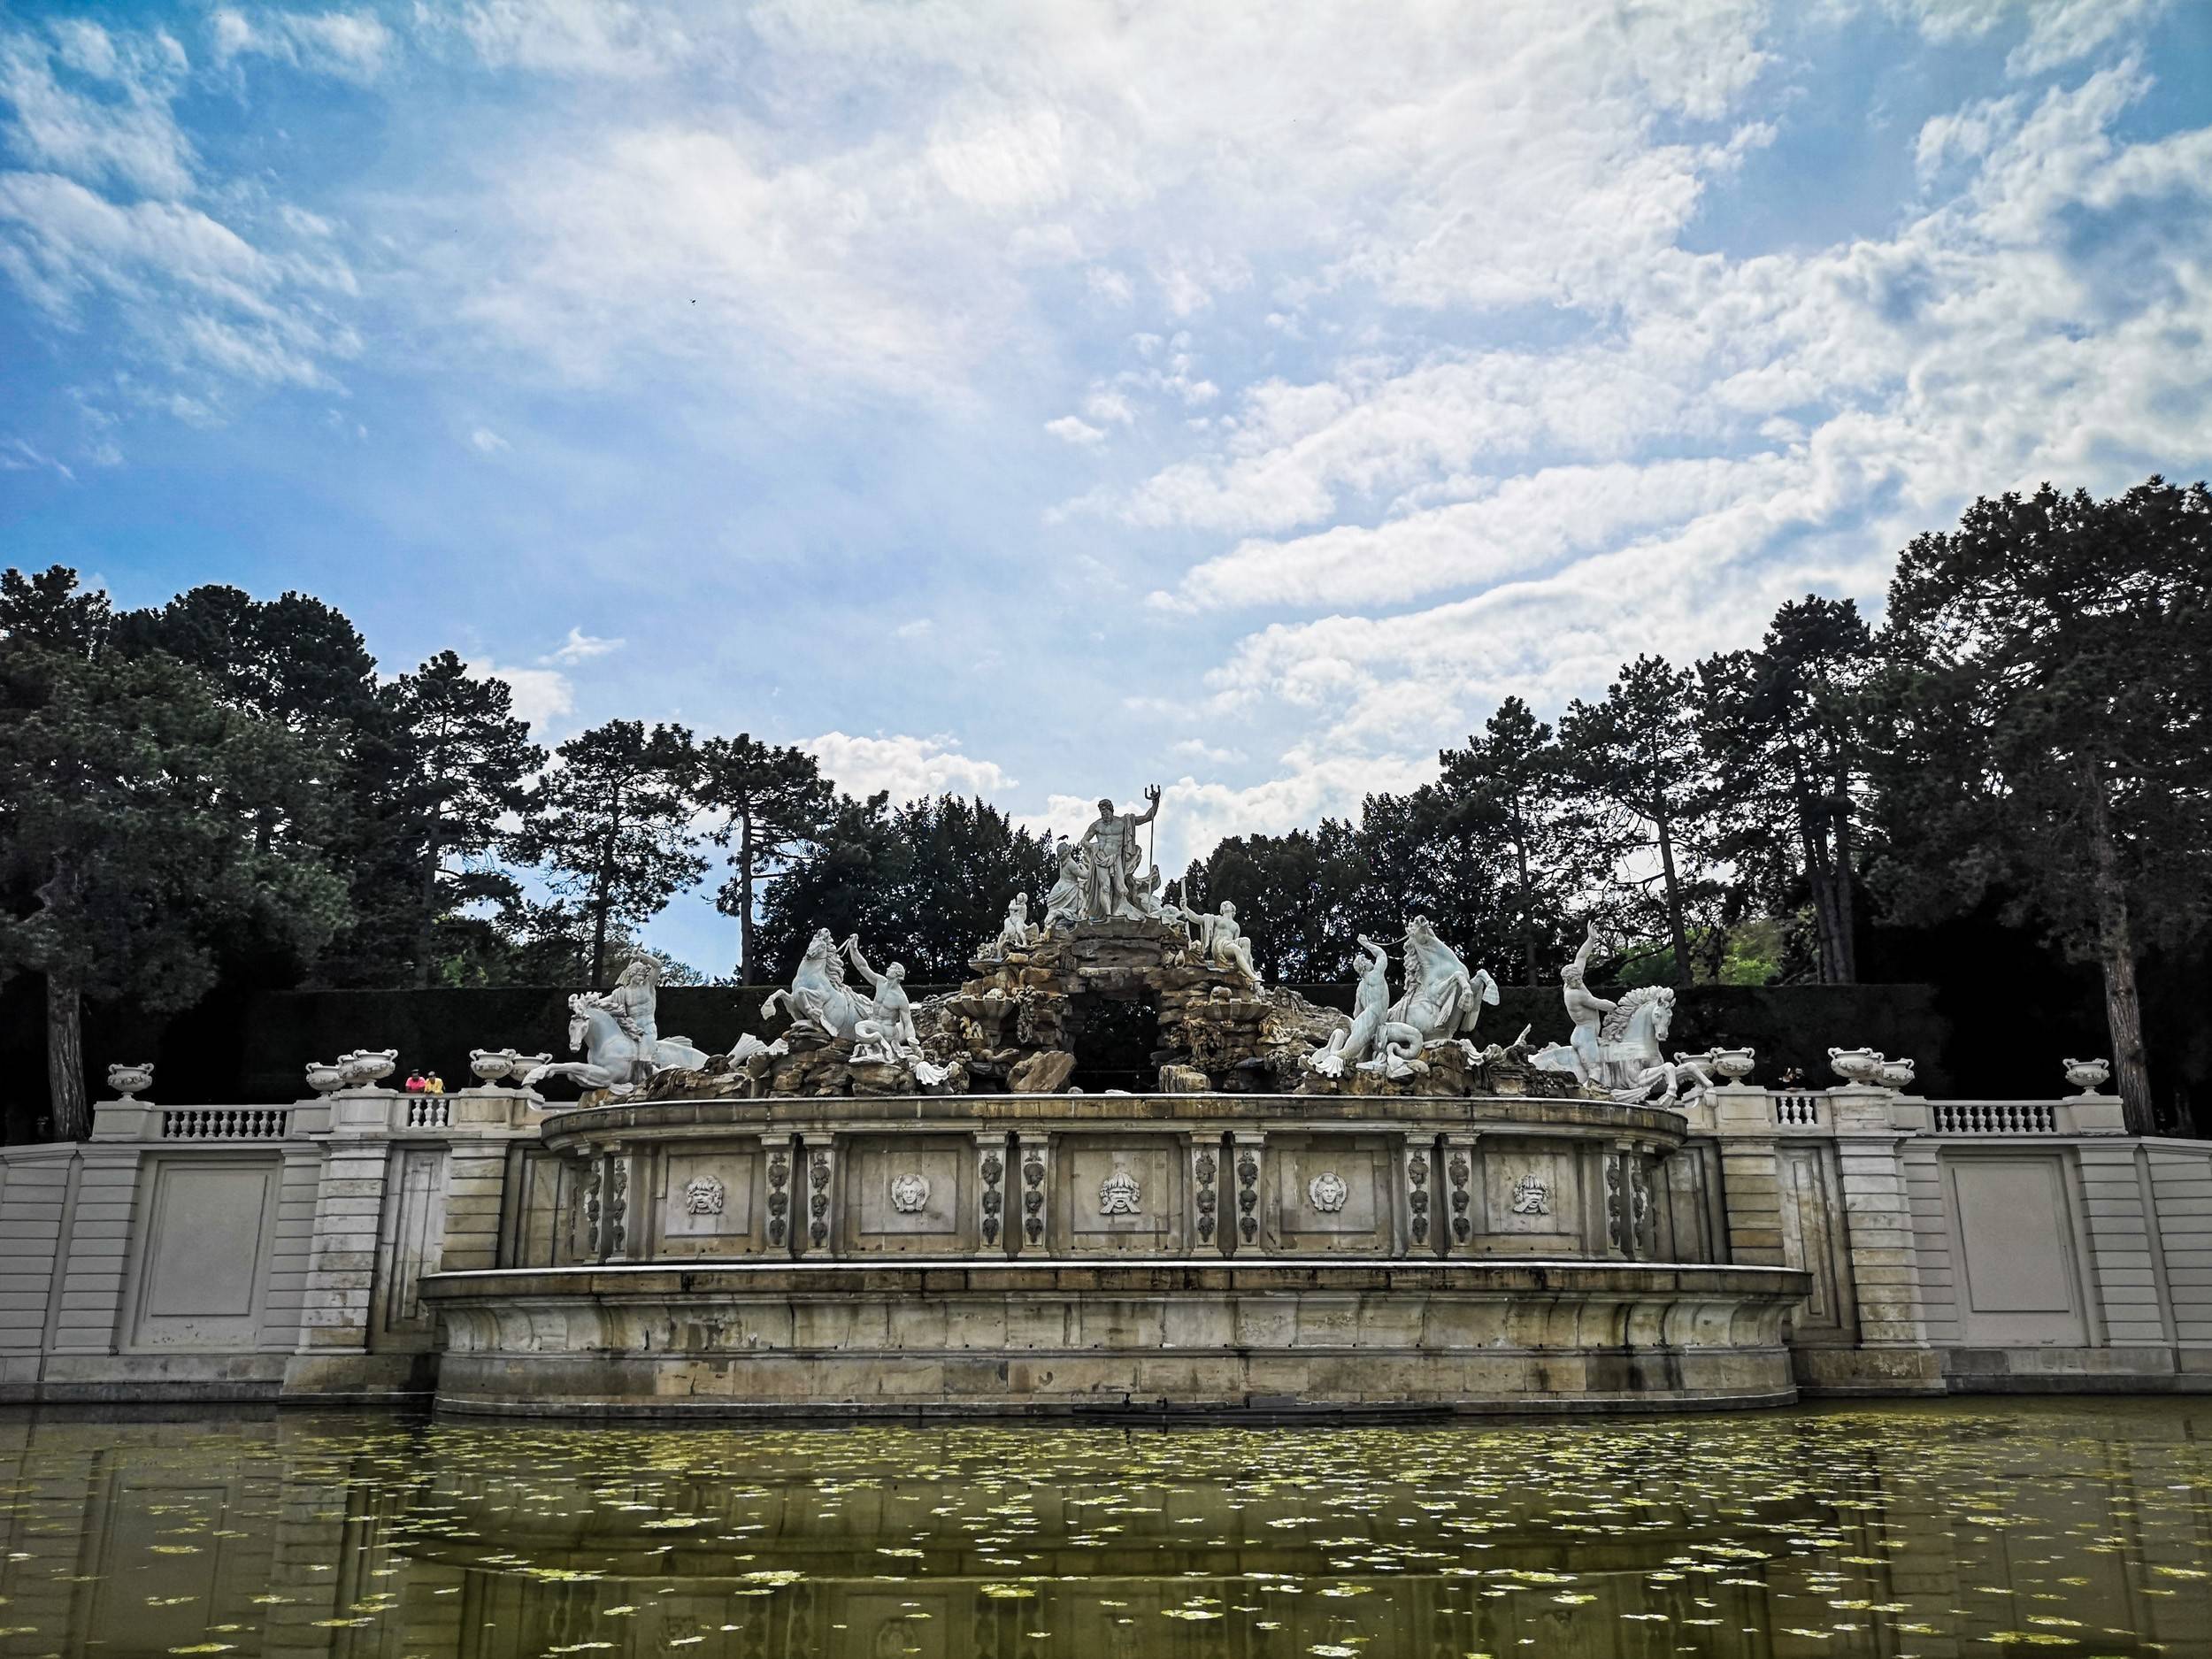 The Neptune Fountain in Schönbrunn Palace, Vienna